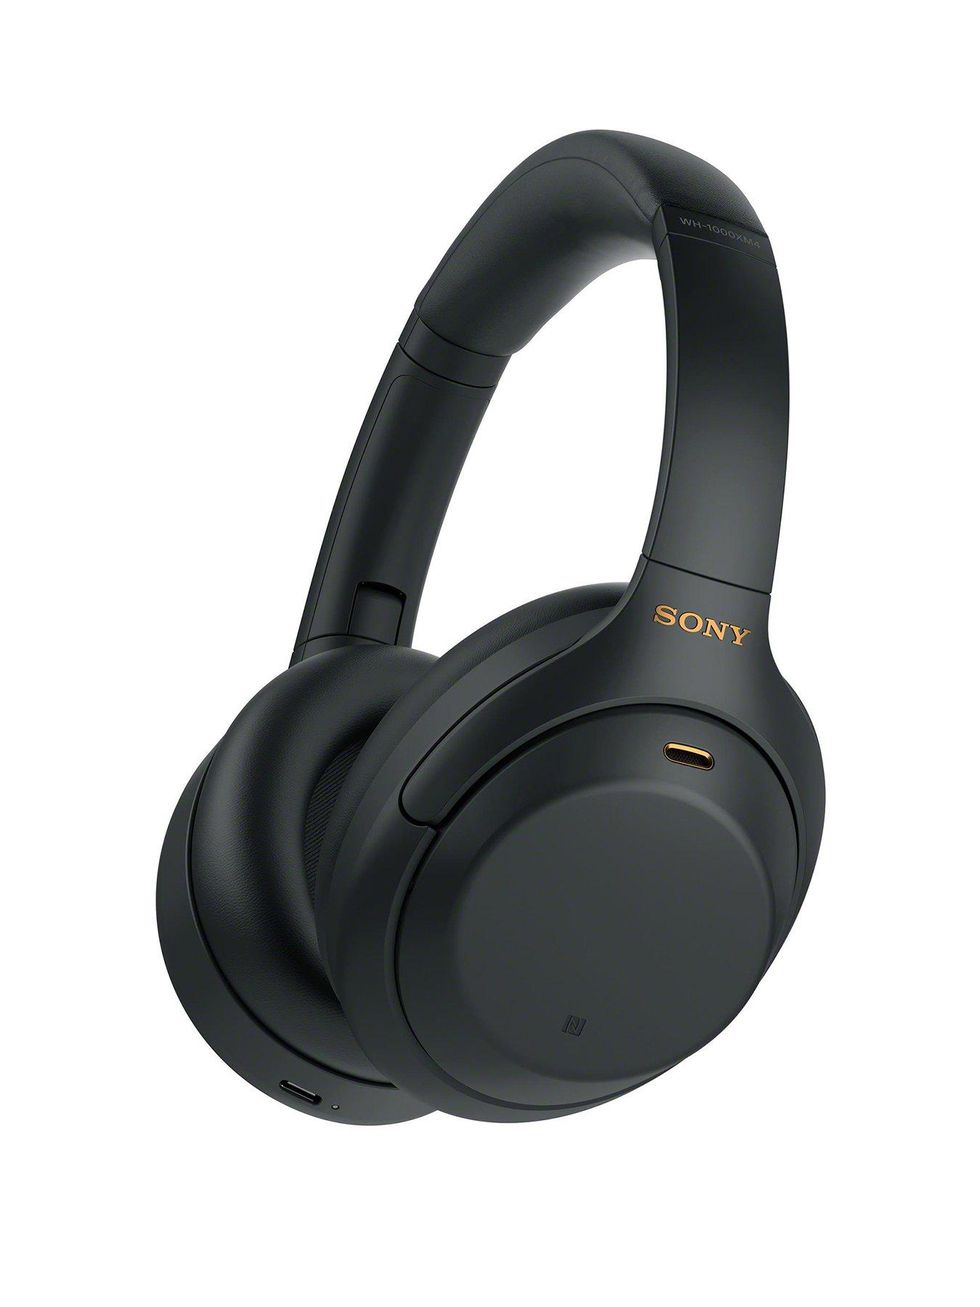 Sony Noise-Cancelling Wireless Headphones